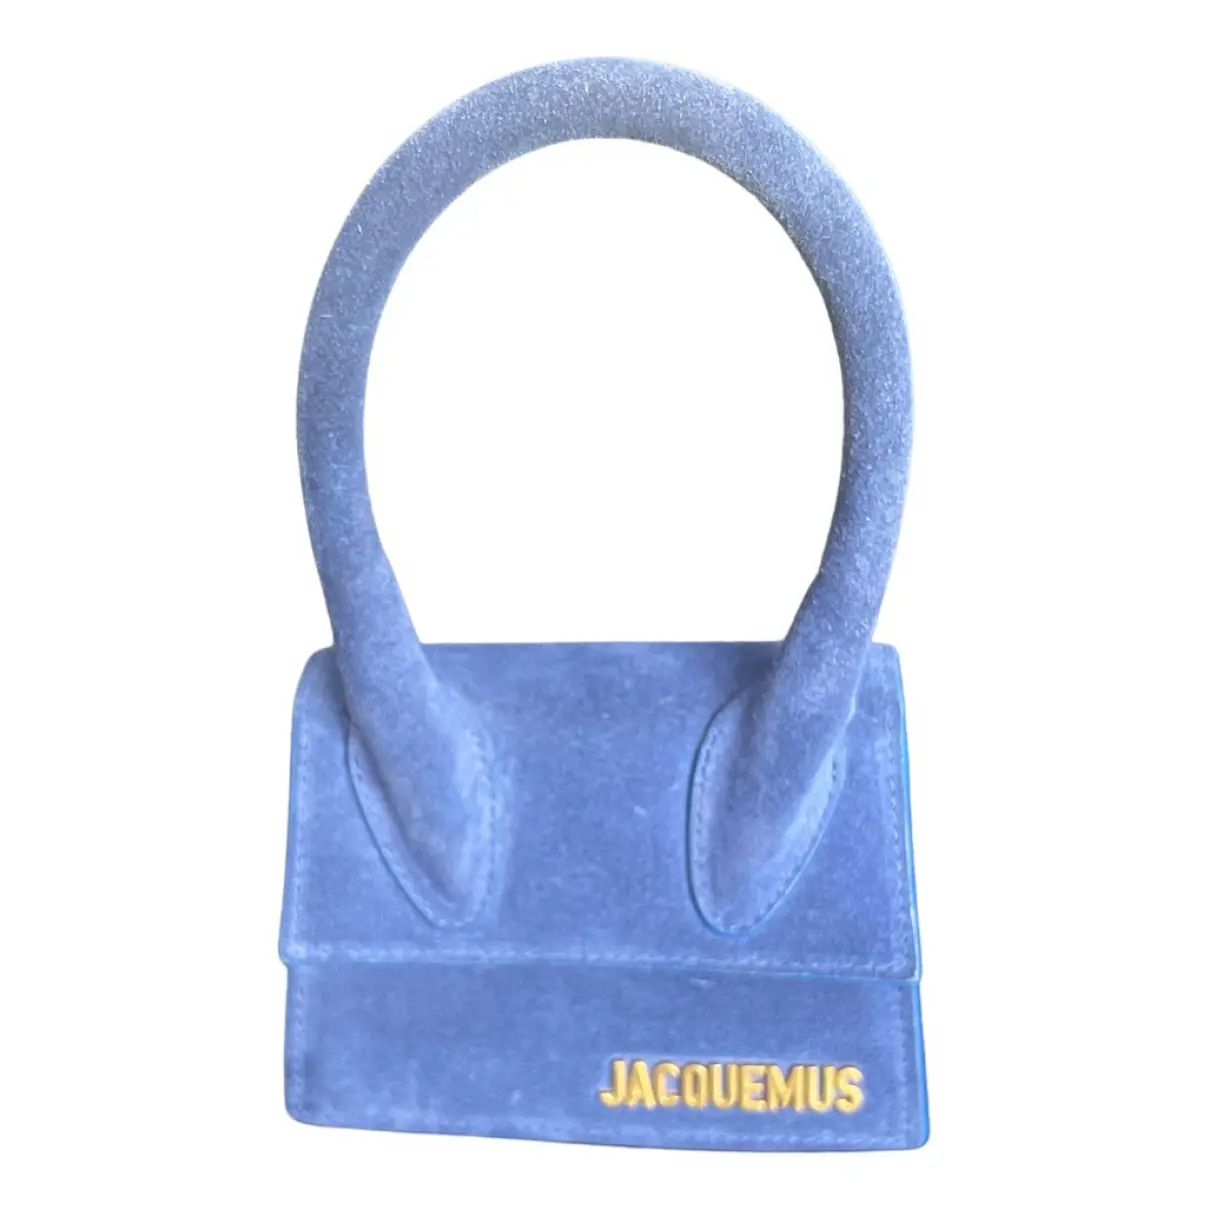 Chiquito handbag Jacquemus